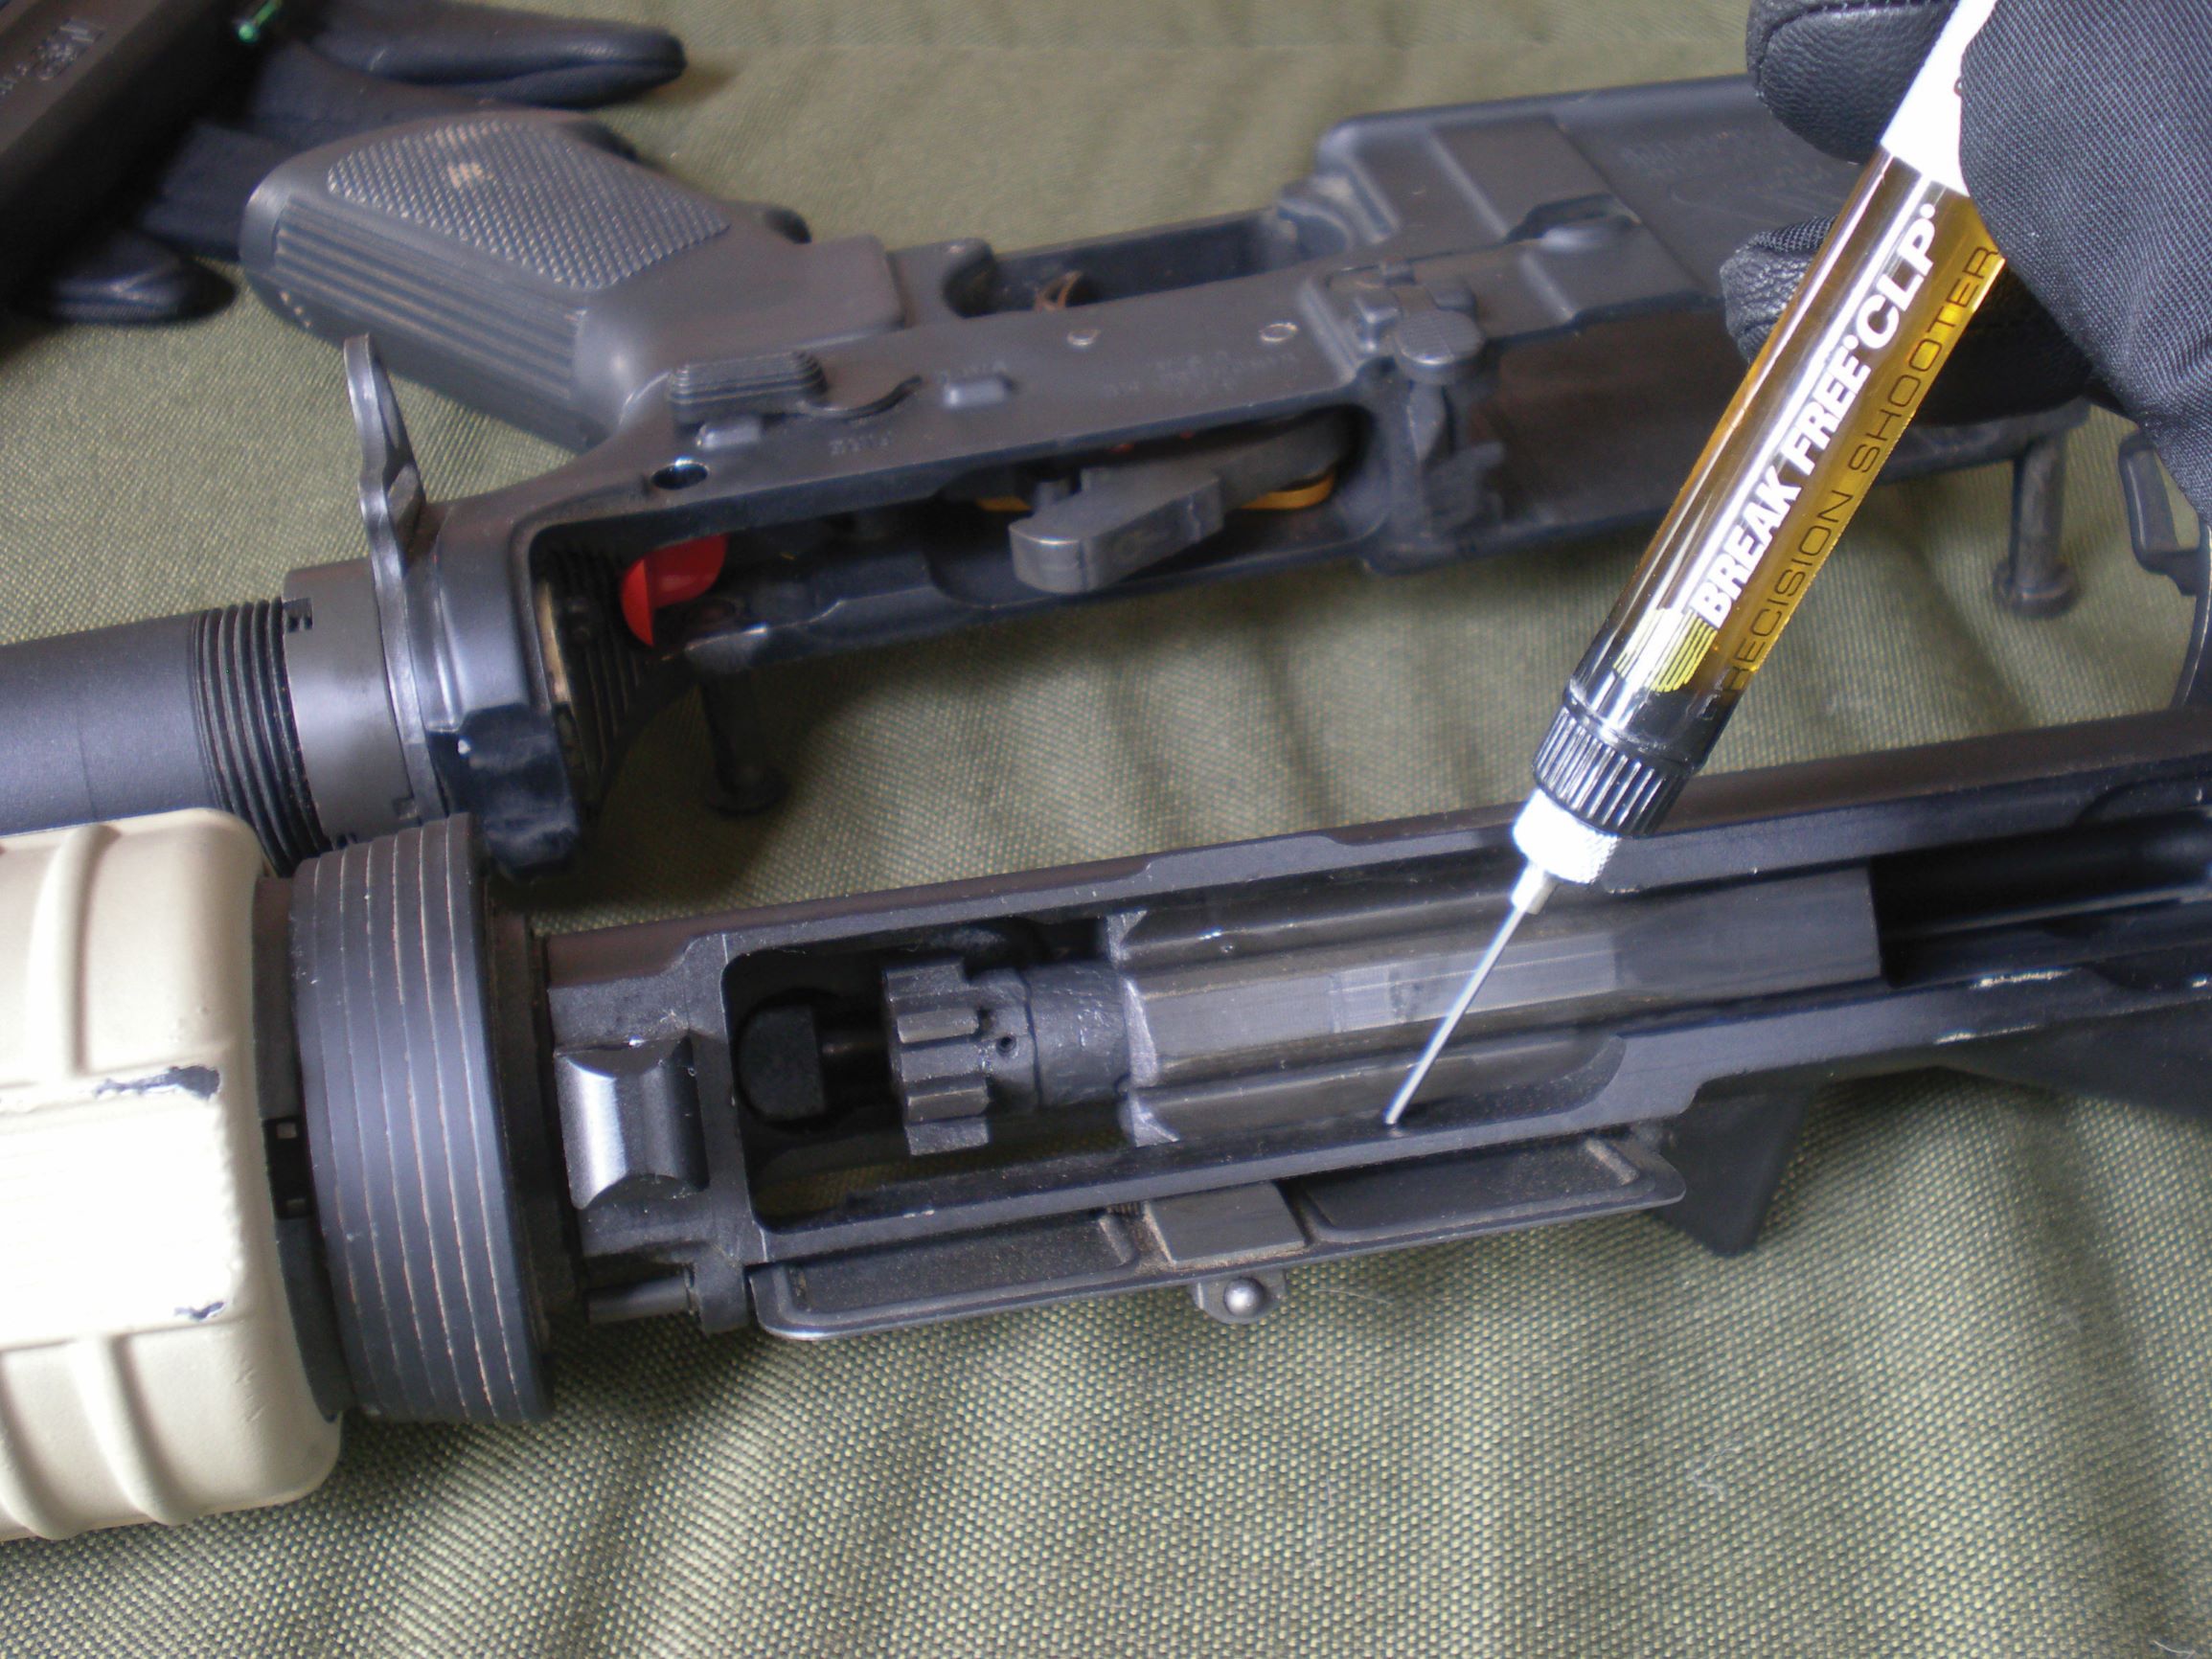 lubricating gun with needle applicator